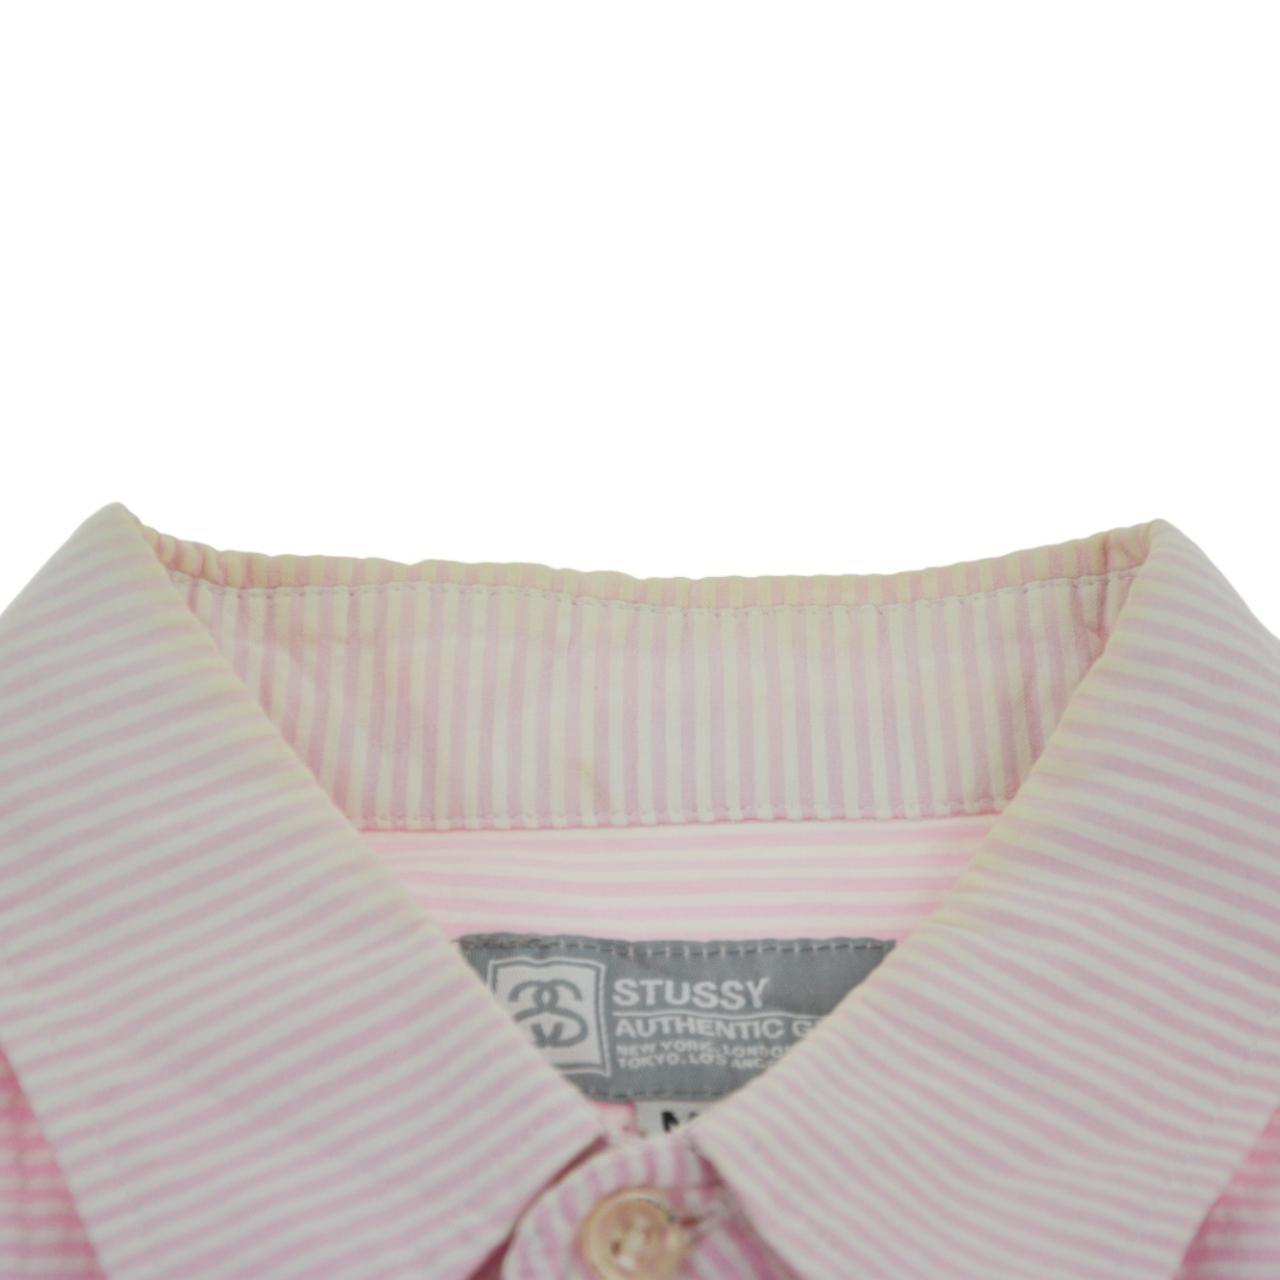 Vintage Stussy Striped Shirt Size M - Known Source